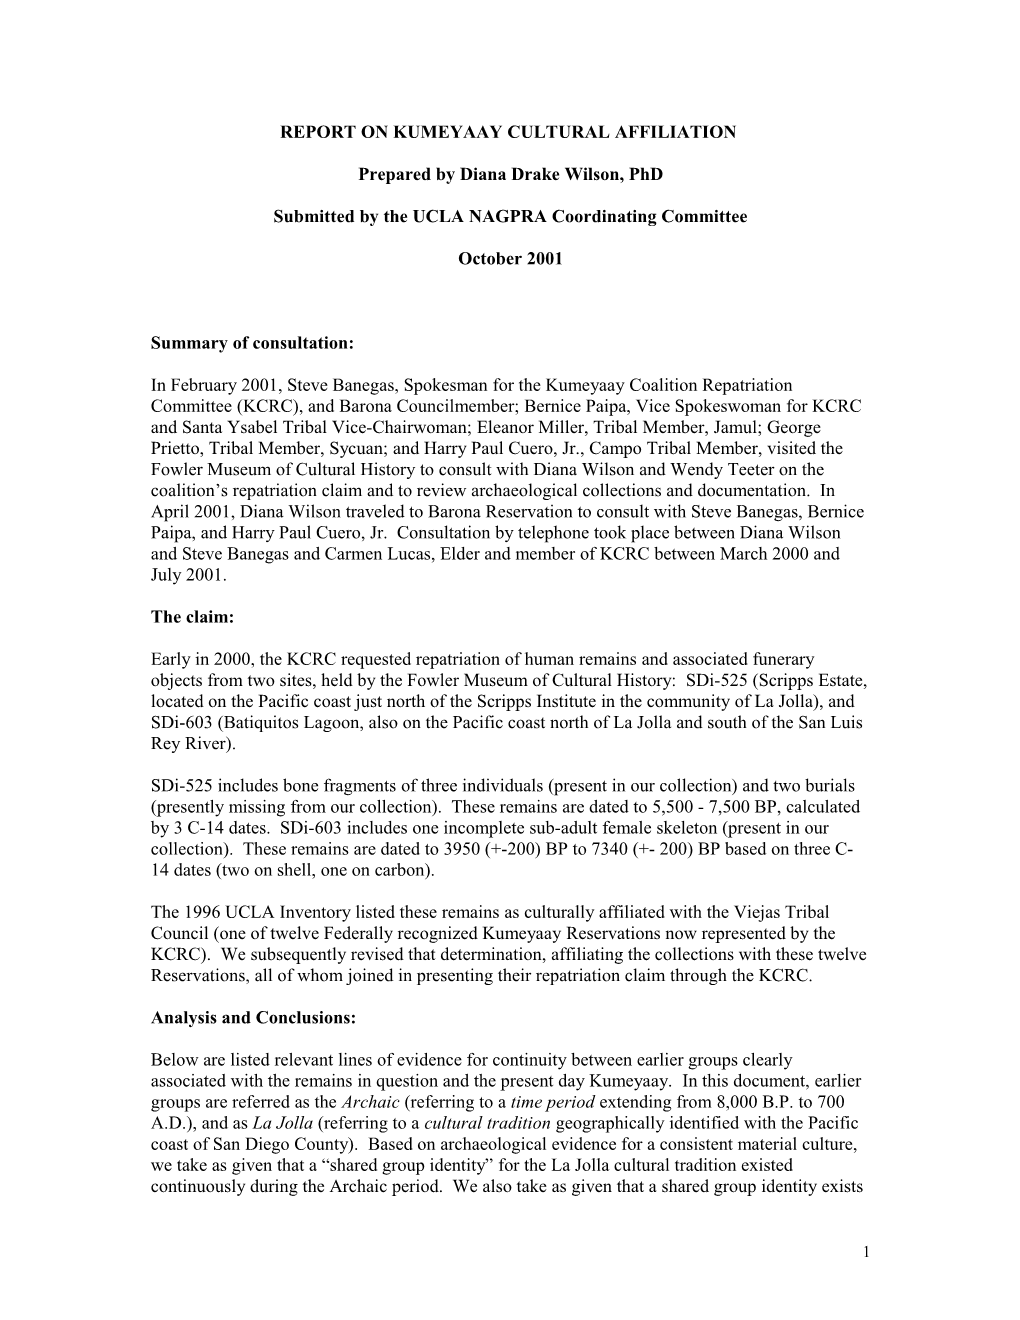 UCLA Draft Report on Kumeyaay Cultural Affiliation